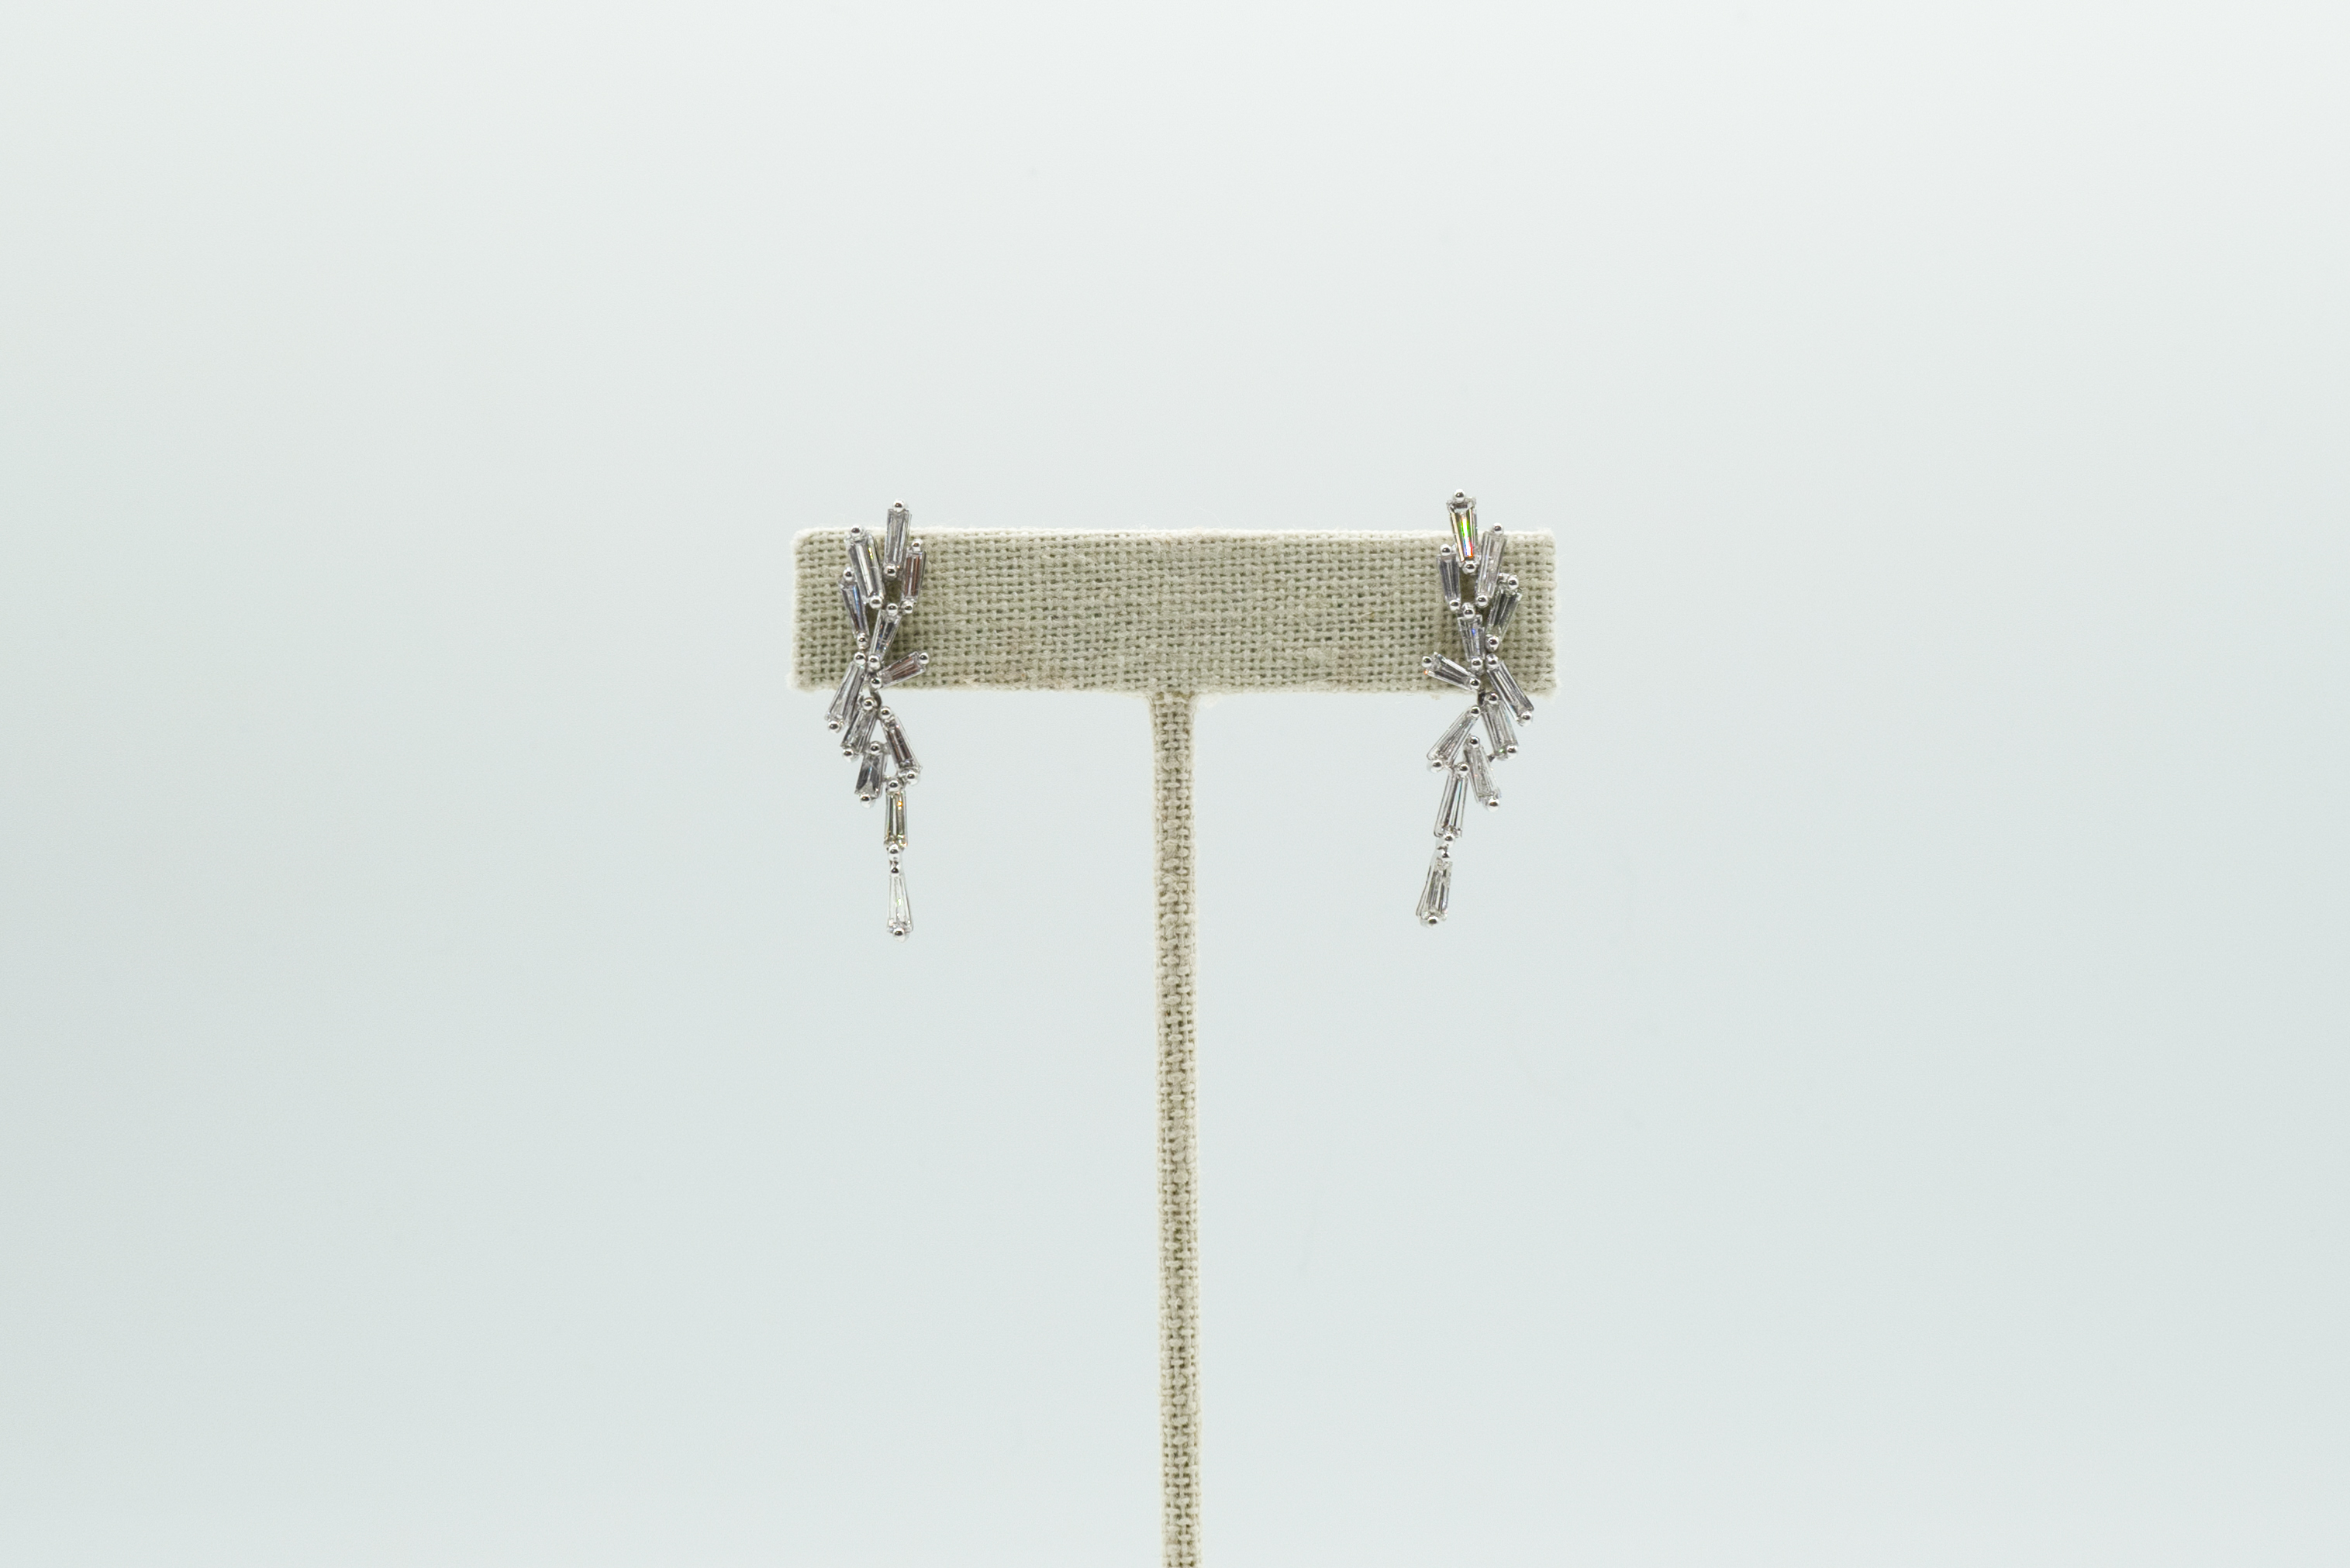 Diamond Sprig Earrings 18k White Gold Convertible with Hidden Hooks 2.52 carat